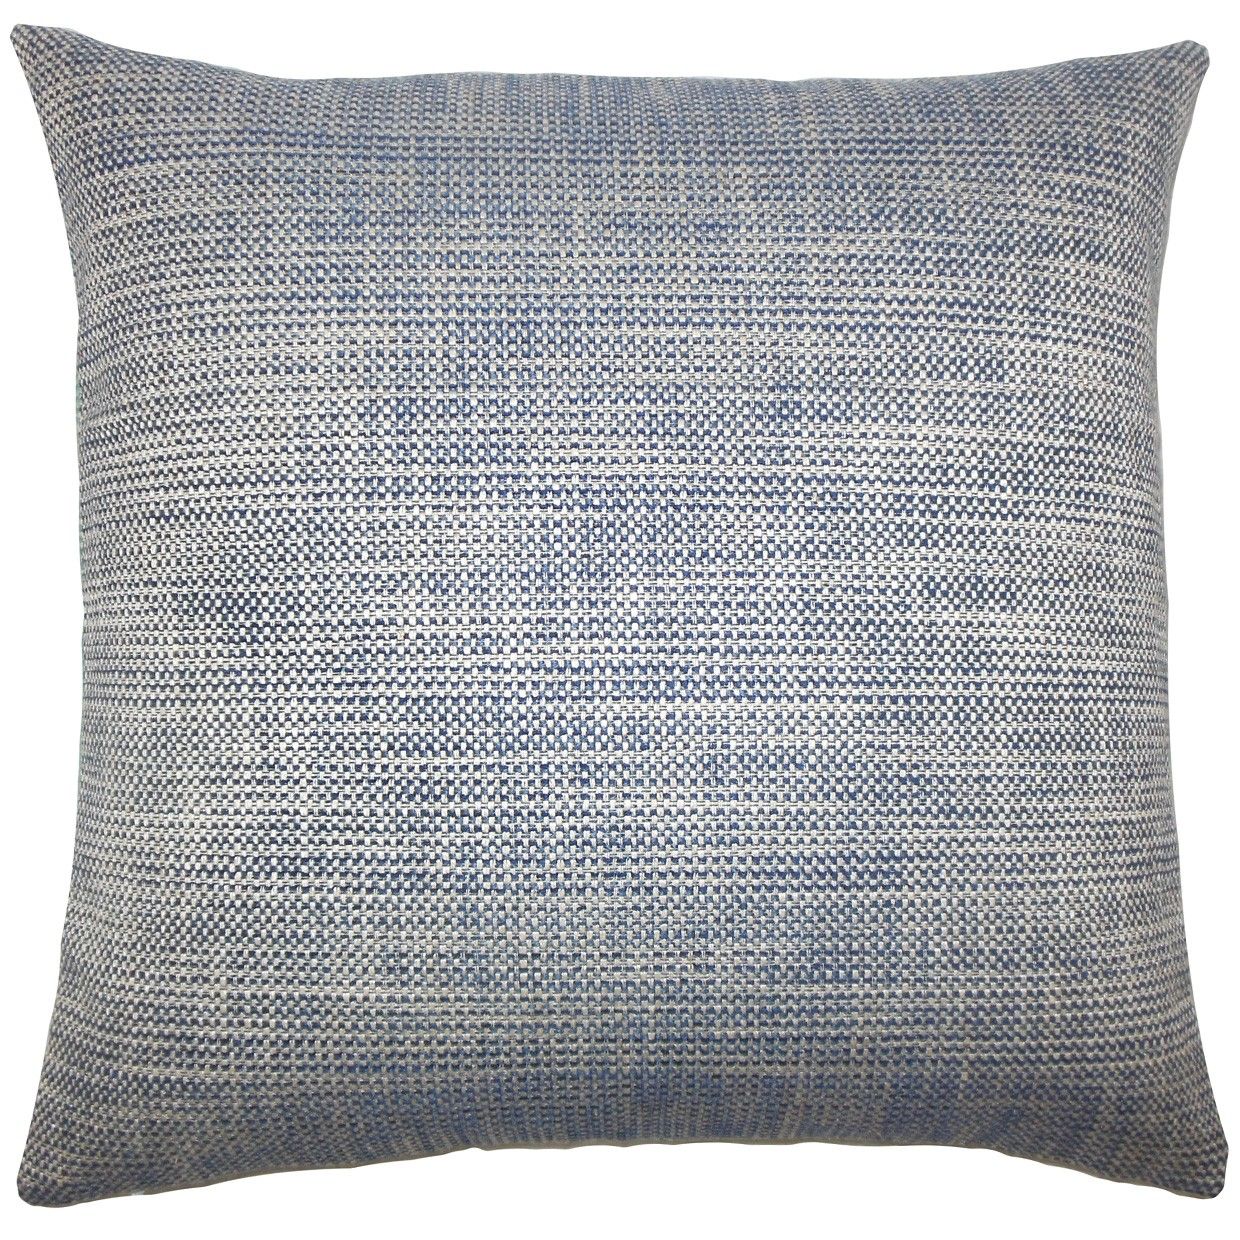 Daker Weave Pillow Indigo - 12" x 18"- Polyester  Insert